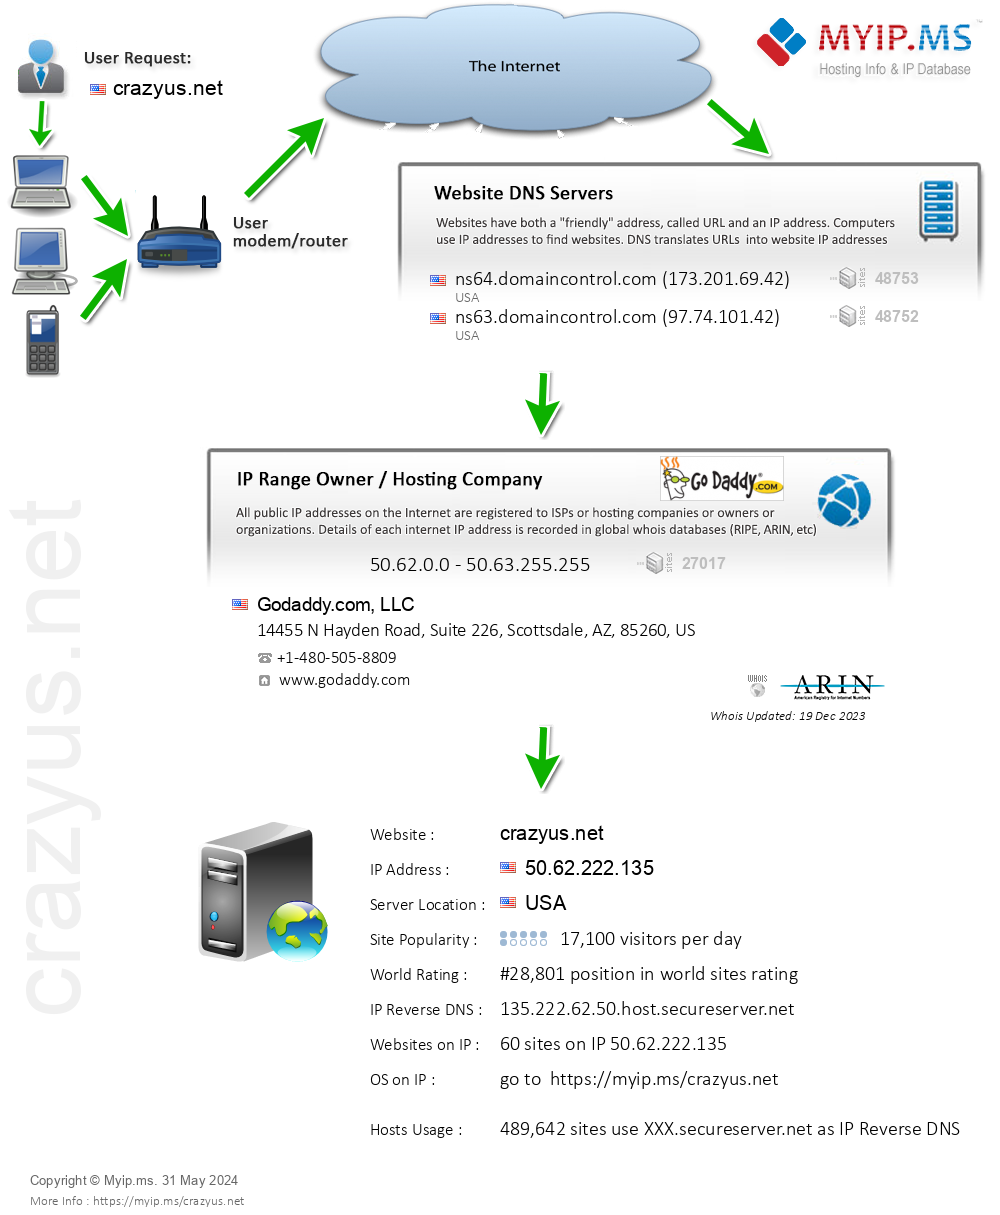 Crazyus.net - Website Hosting Visual IP Diagram